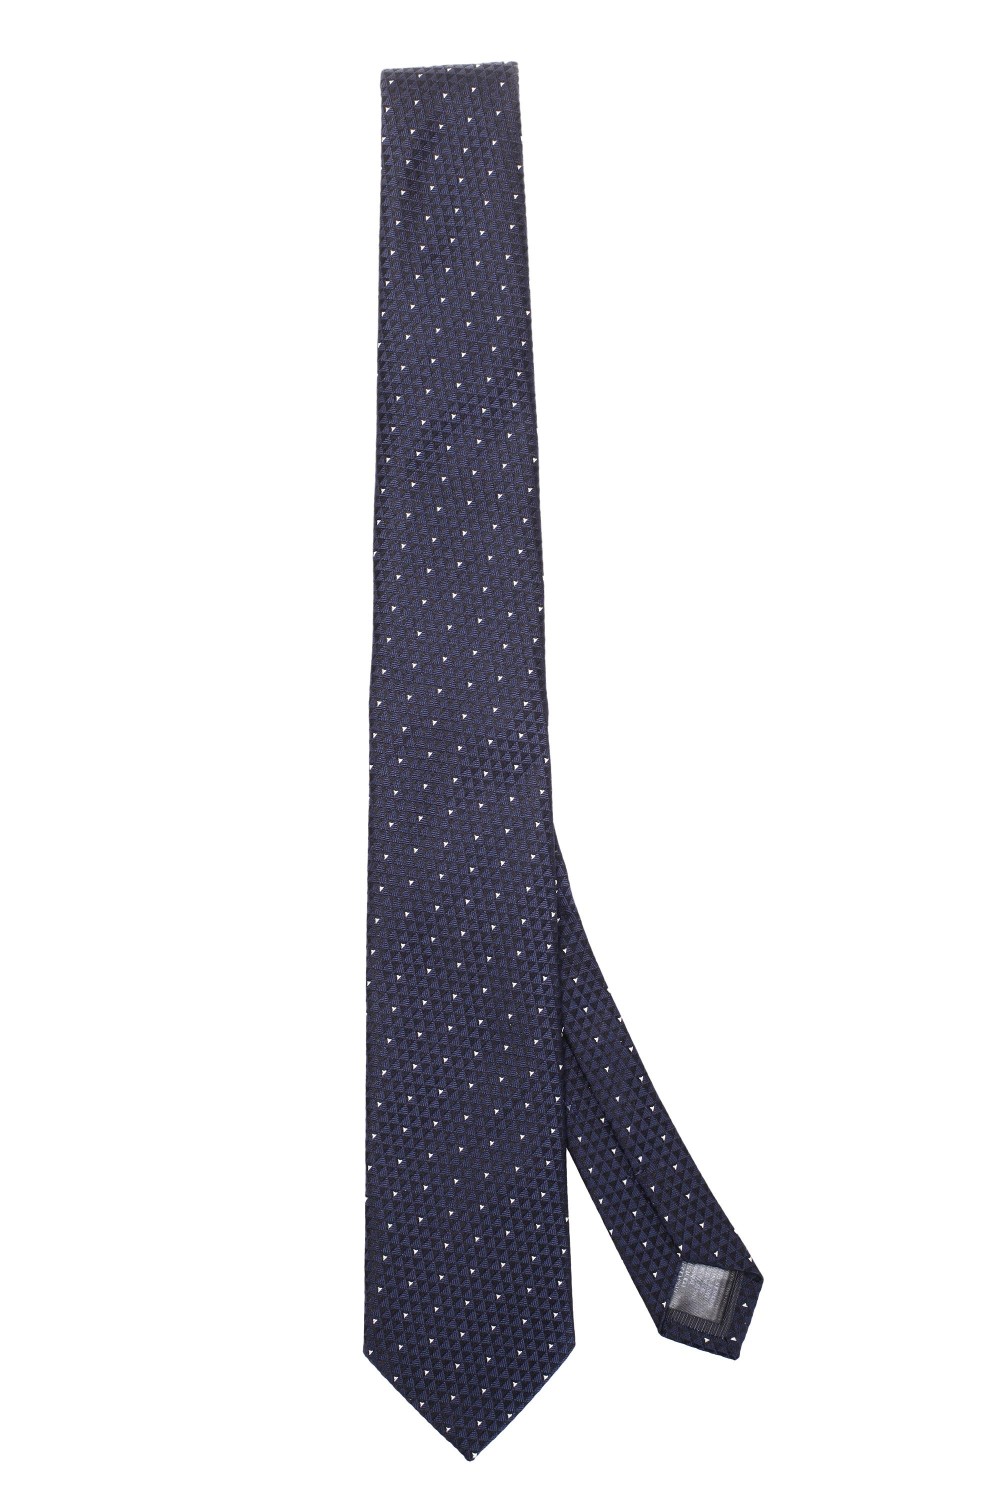 shop Z ZEGNA  Cravatta: Z Zegna cravatta blu.
Composizione: 59% Poliestere 41% Seta.
Fabbricato in Italia.. Z3Z00T 1S7-BL1 419 number 5870353